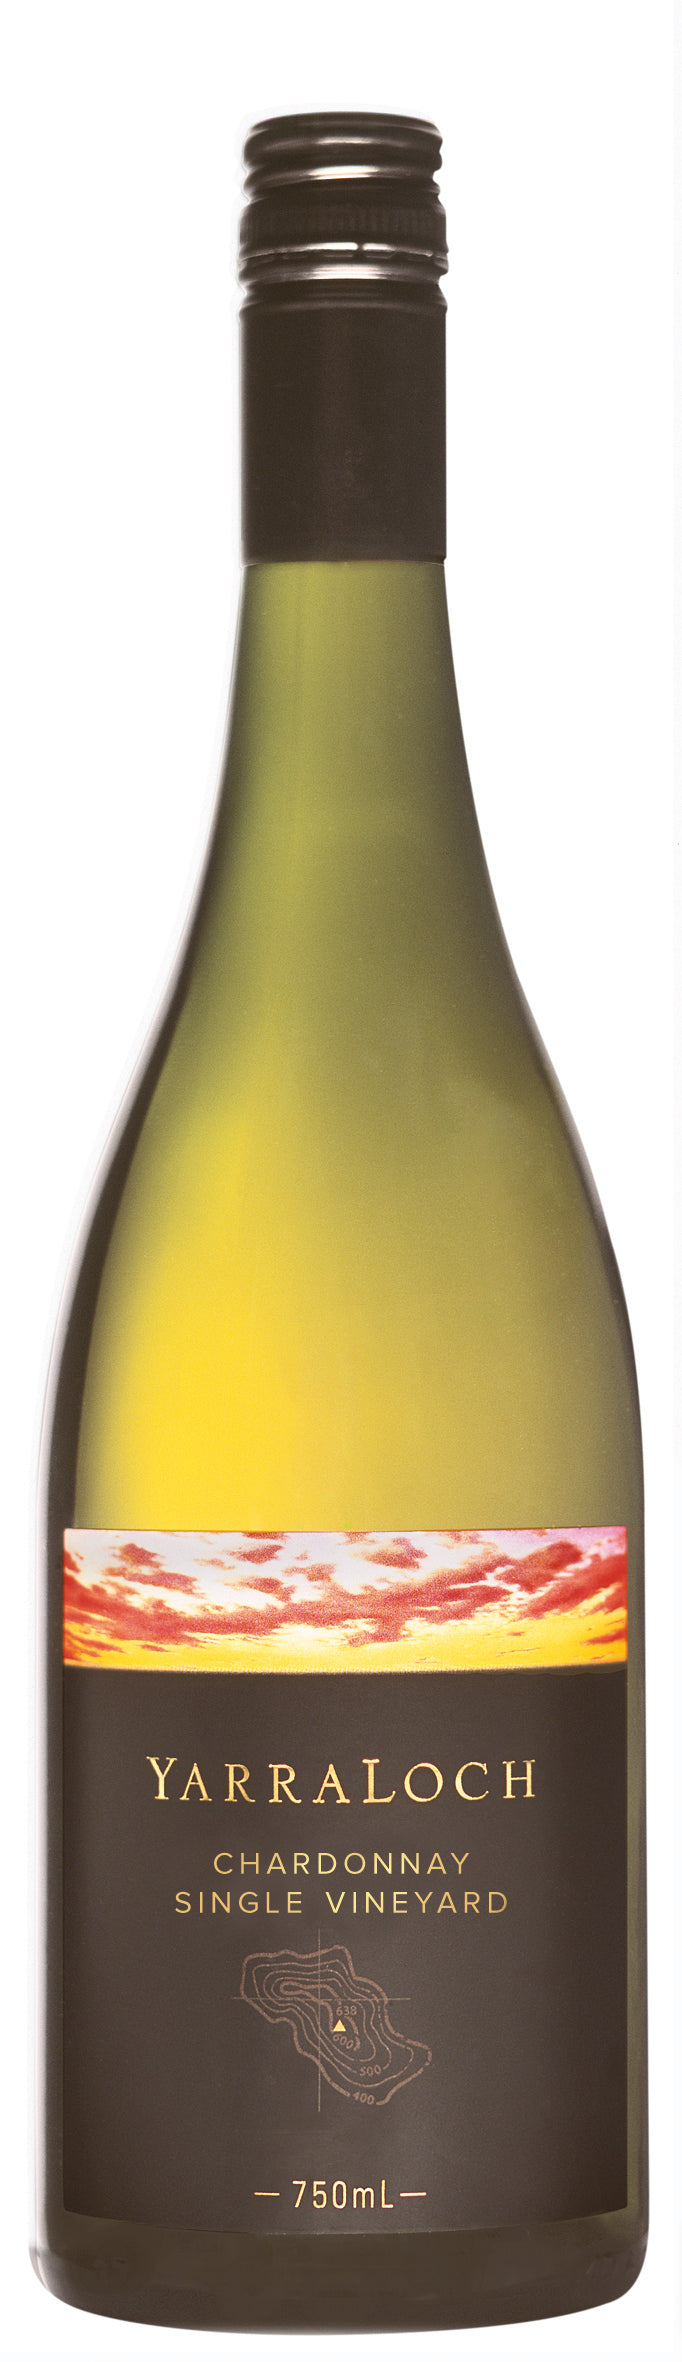 YarraLoch Single Vineyard Chardonnay 2015